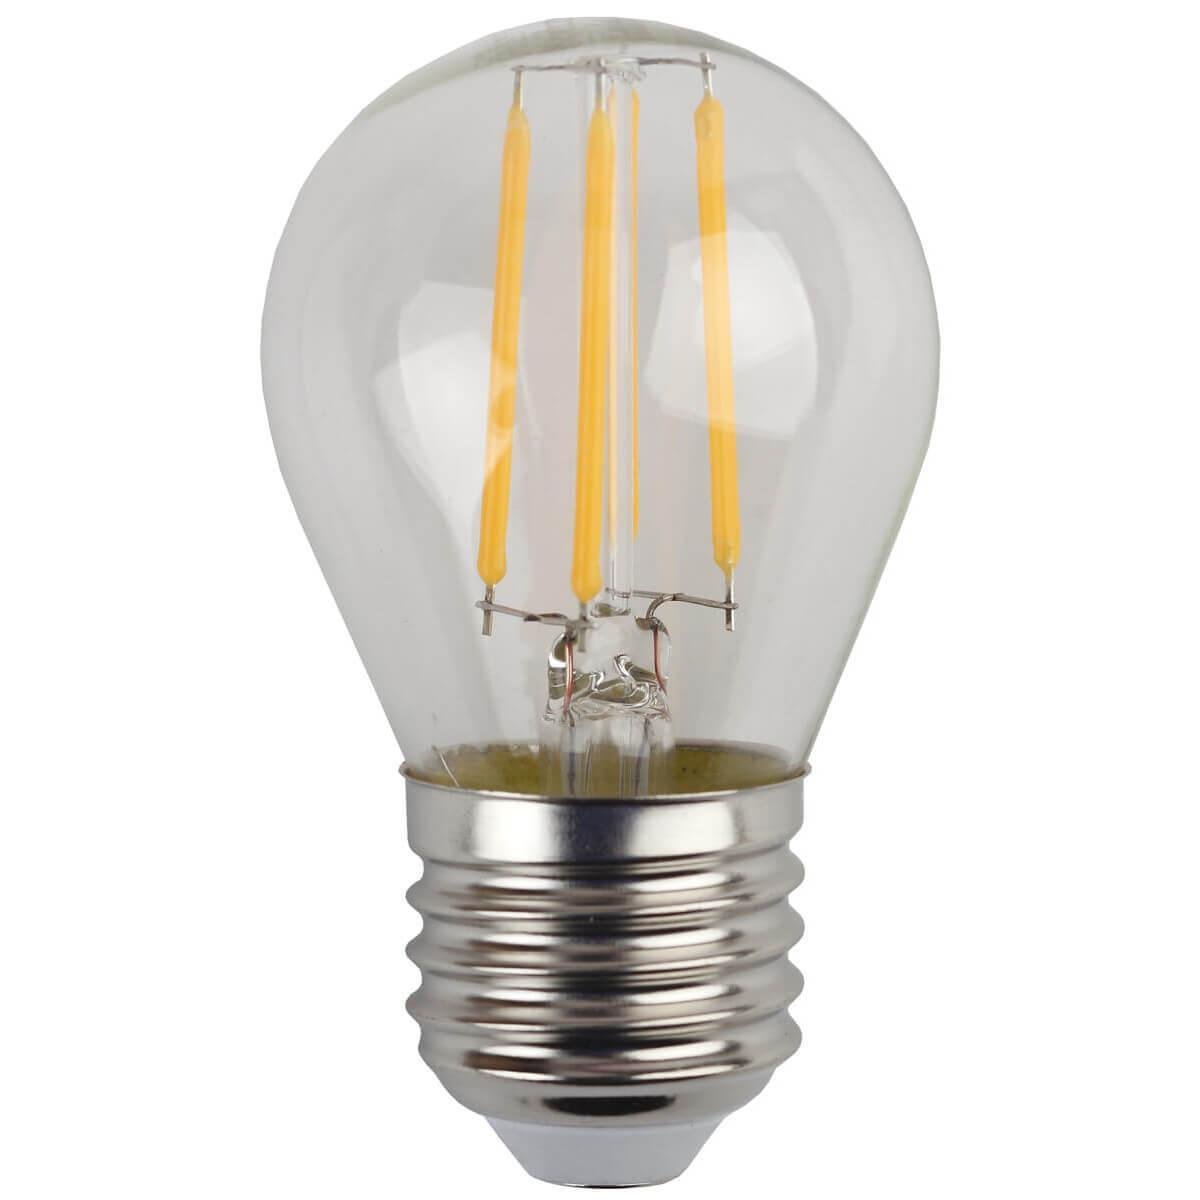 Лампа светодиодная филаментная ЭРА E27 5W 4000K прозрачный F-LED Р45-5W-840-E27. 